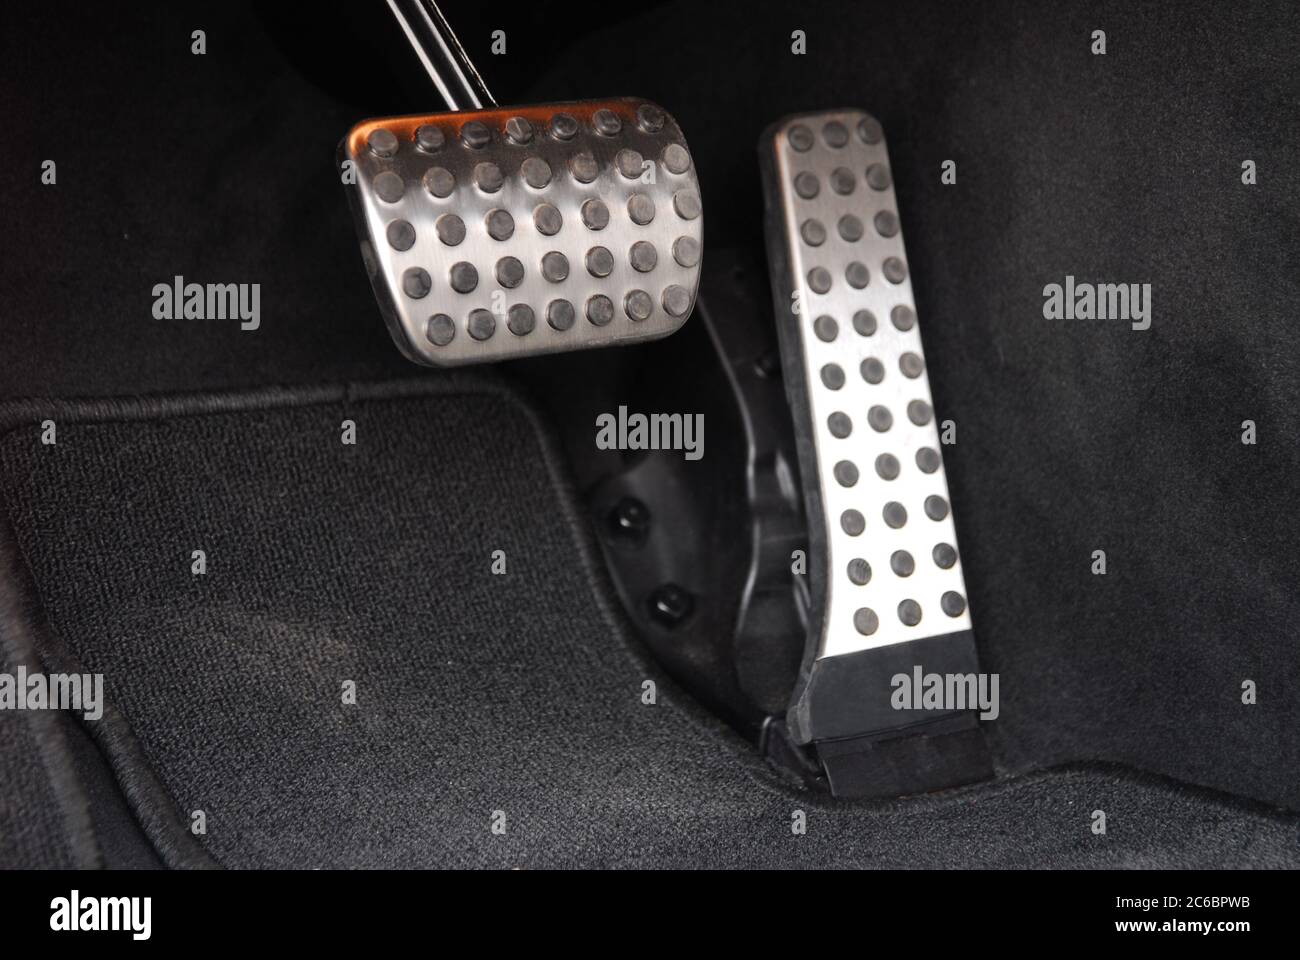 Brems- und Gaspedal, Bremspedal und Gaspedal in einem Auto mit  Automatikgetriebe Stockfotografie - Alamy